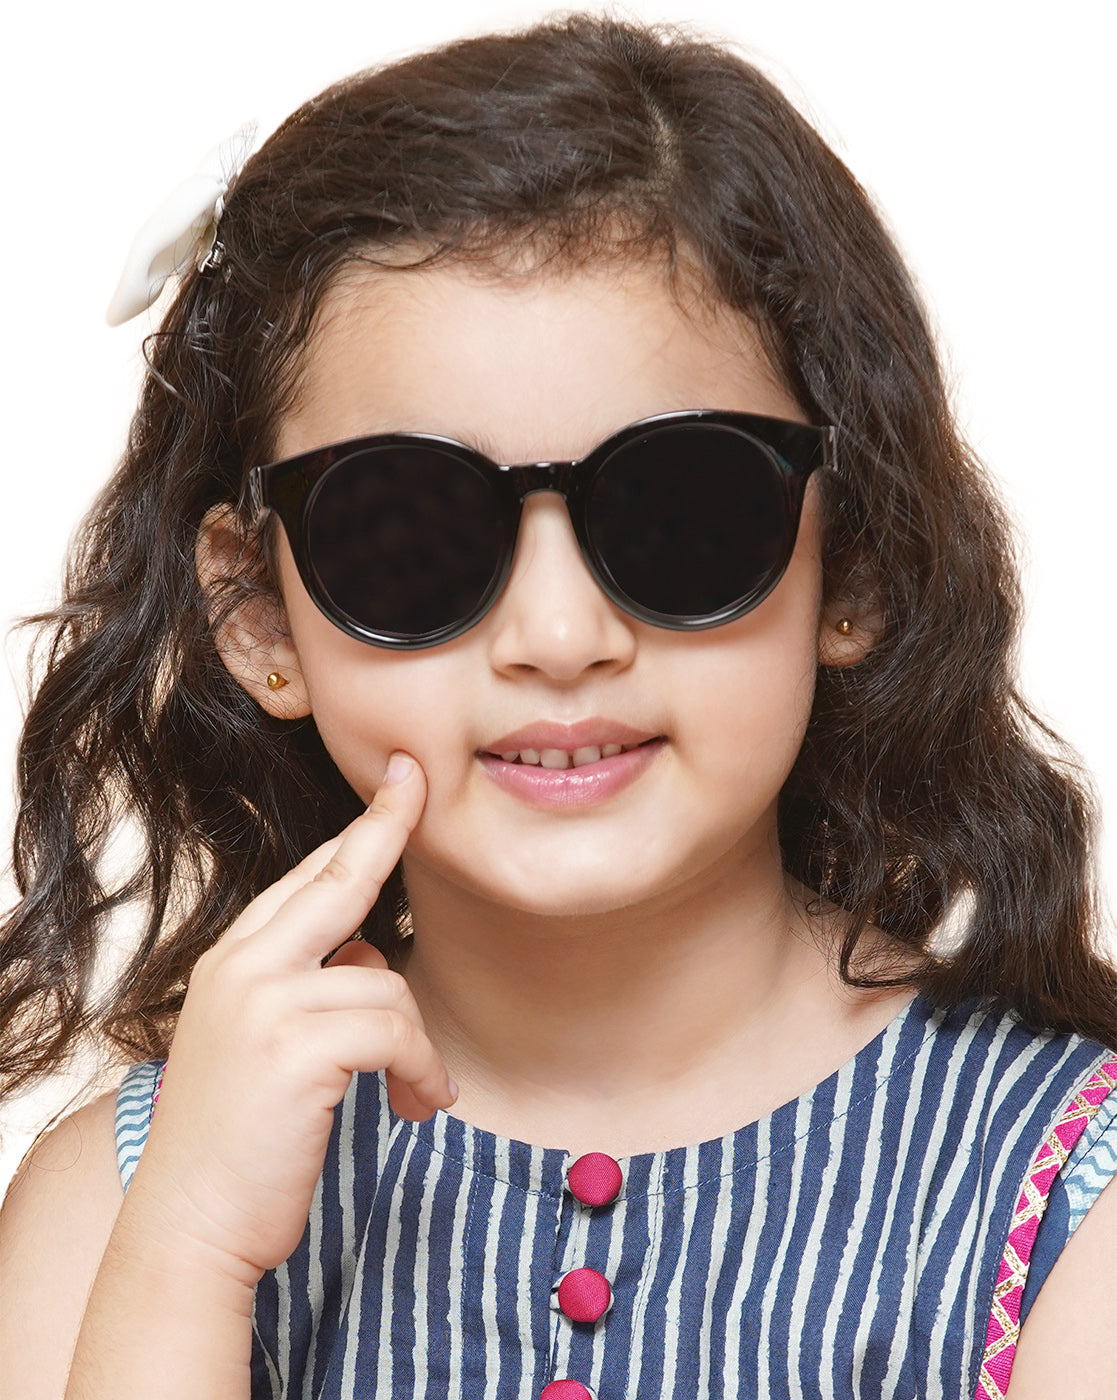 Matilda Sunglasses Black / Orange